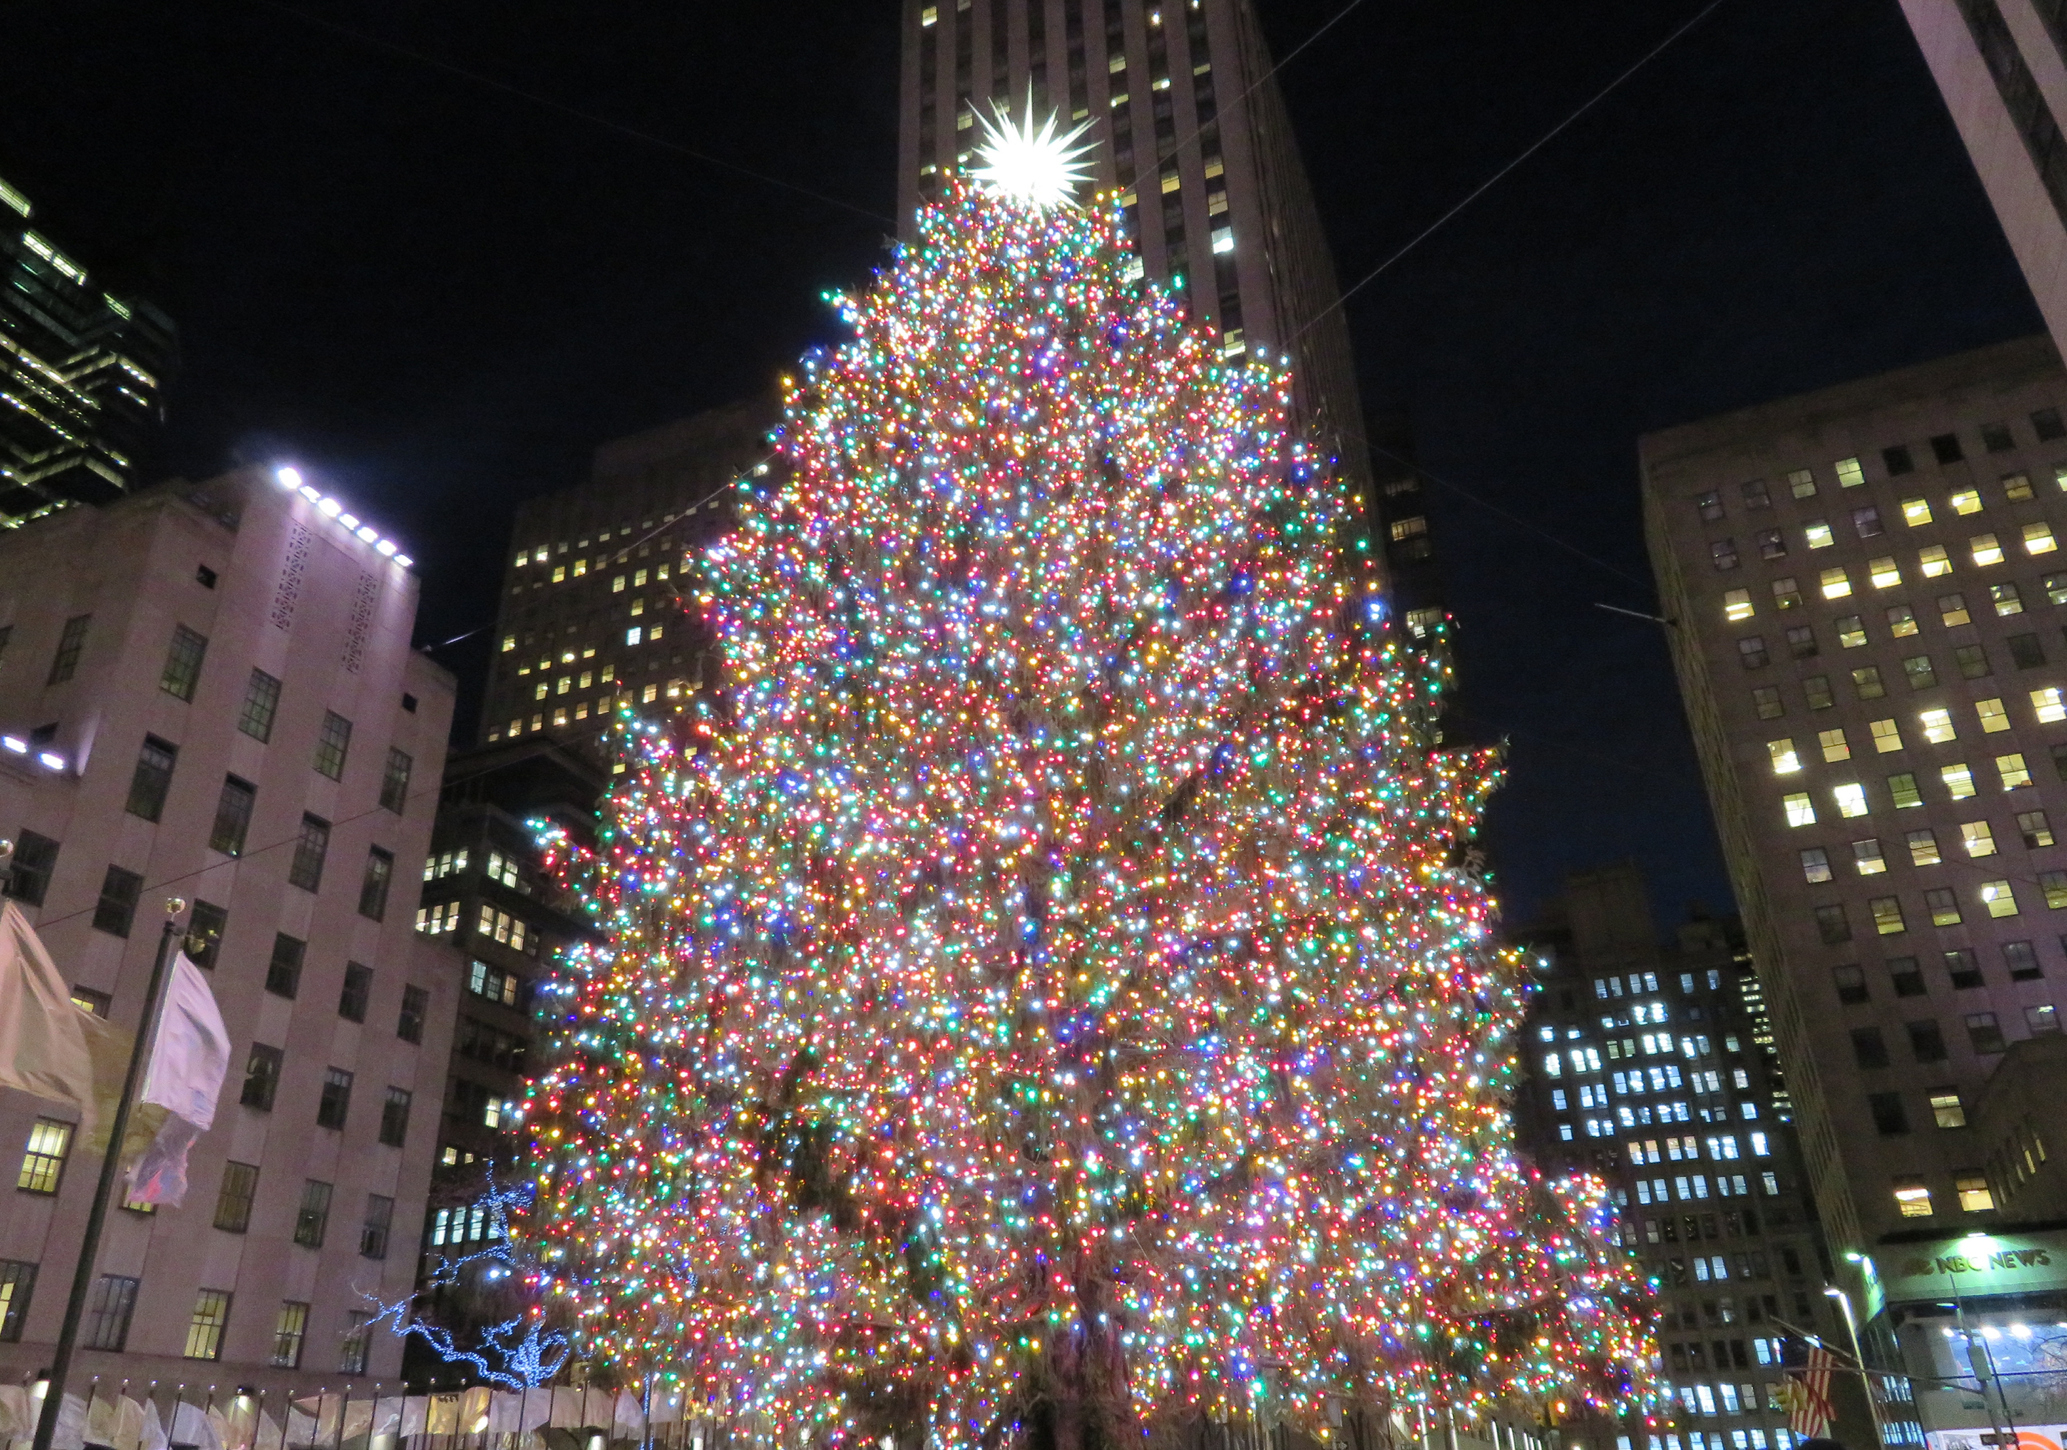 Large, illuminated Christmas tree at night with surrounding buildings